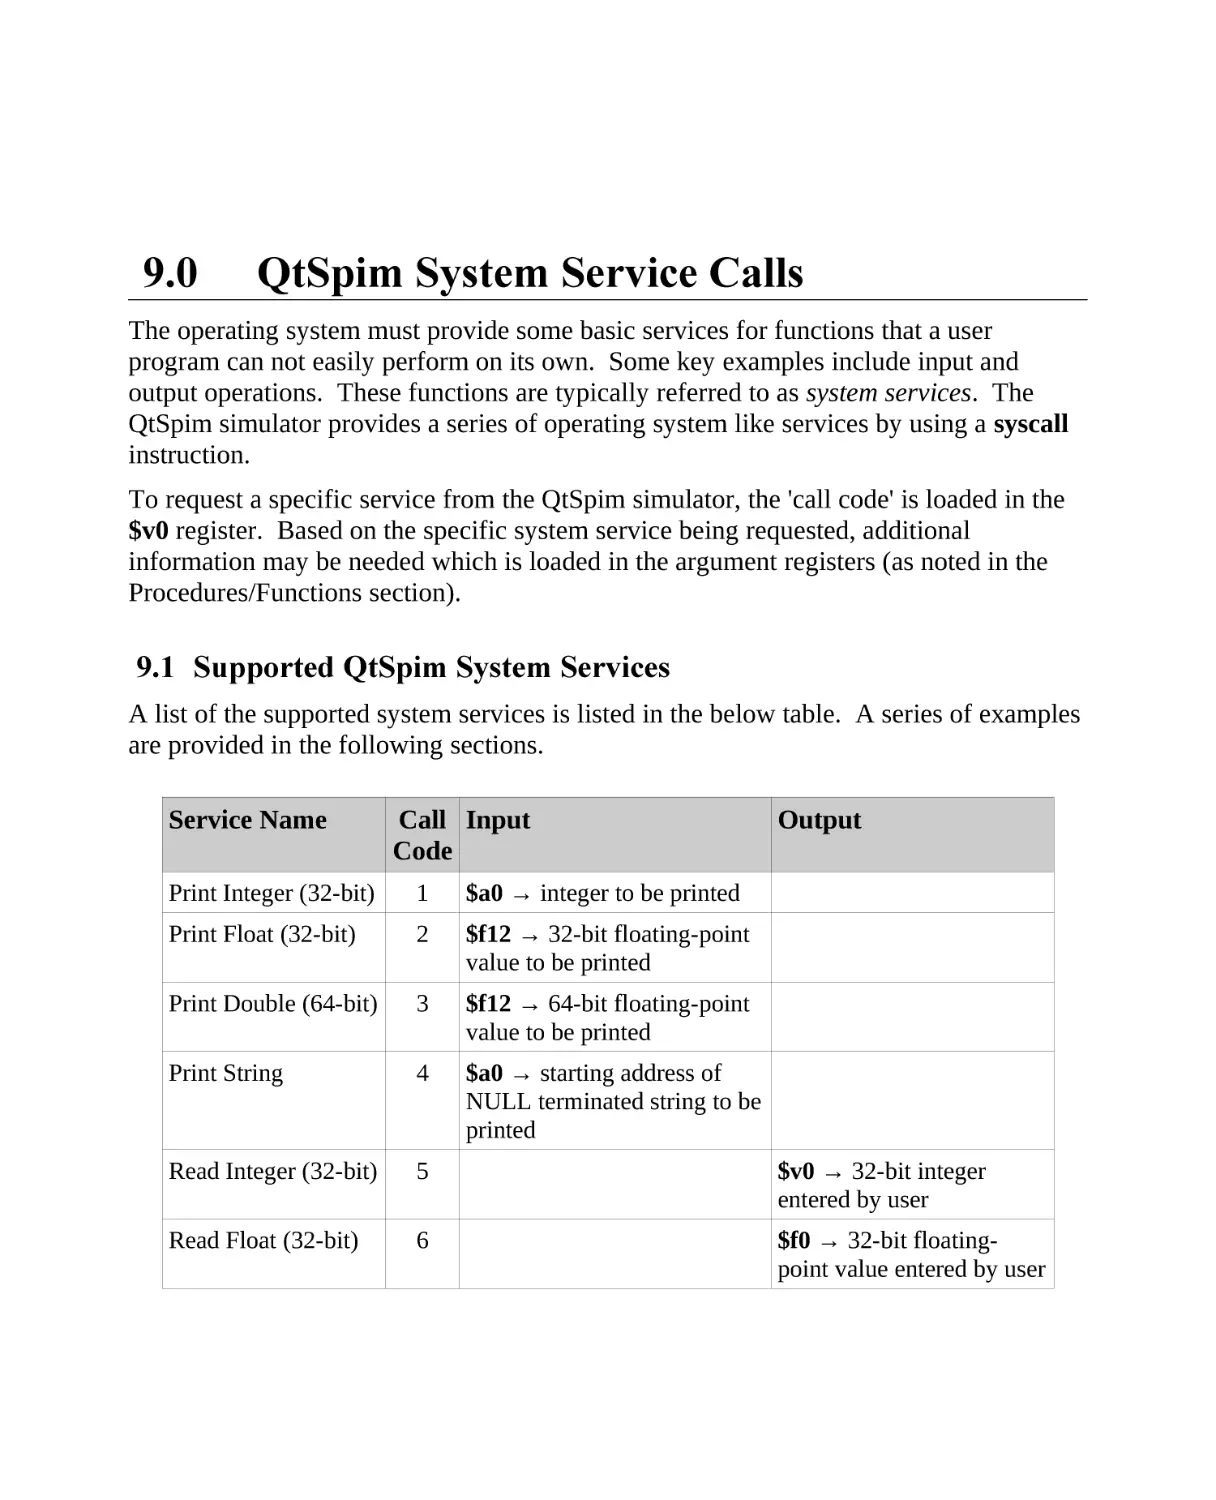 9.0 QtSpim System Service Calls
9.1 Supported QtSpim System Services